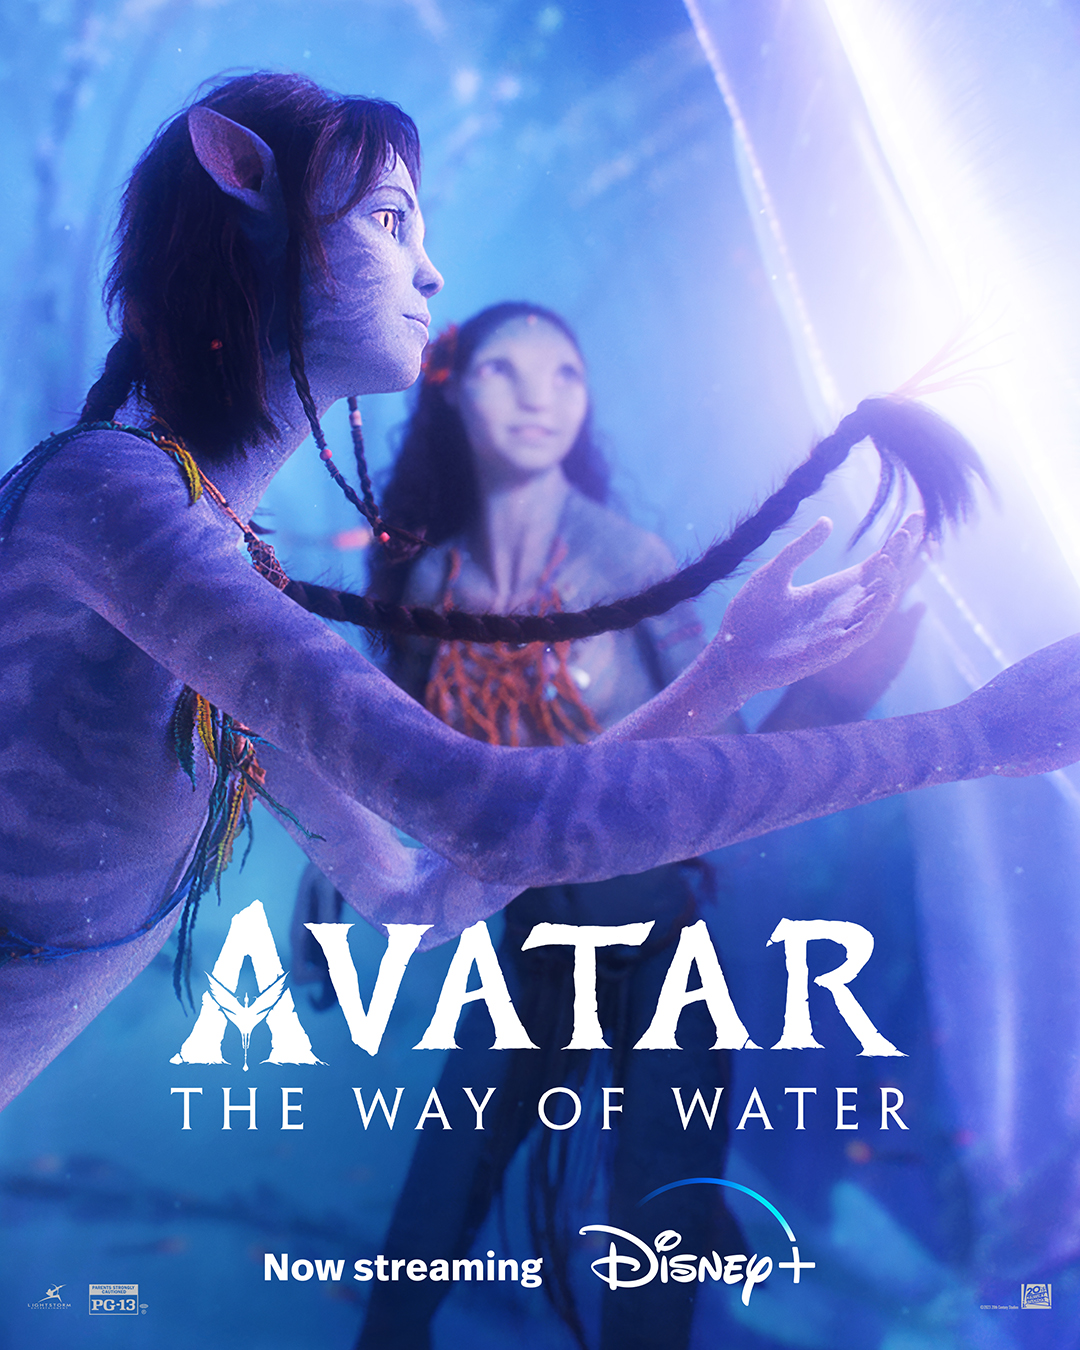 Full Speed Ahead: 'Avatar' Sequel Again Dominates Box Office